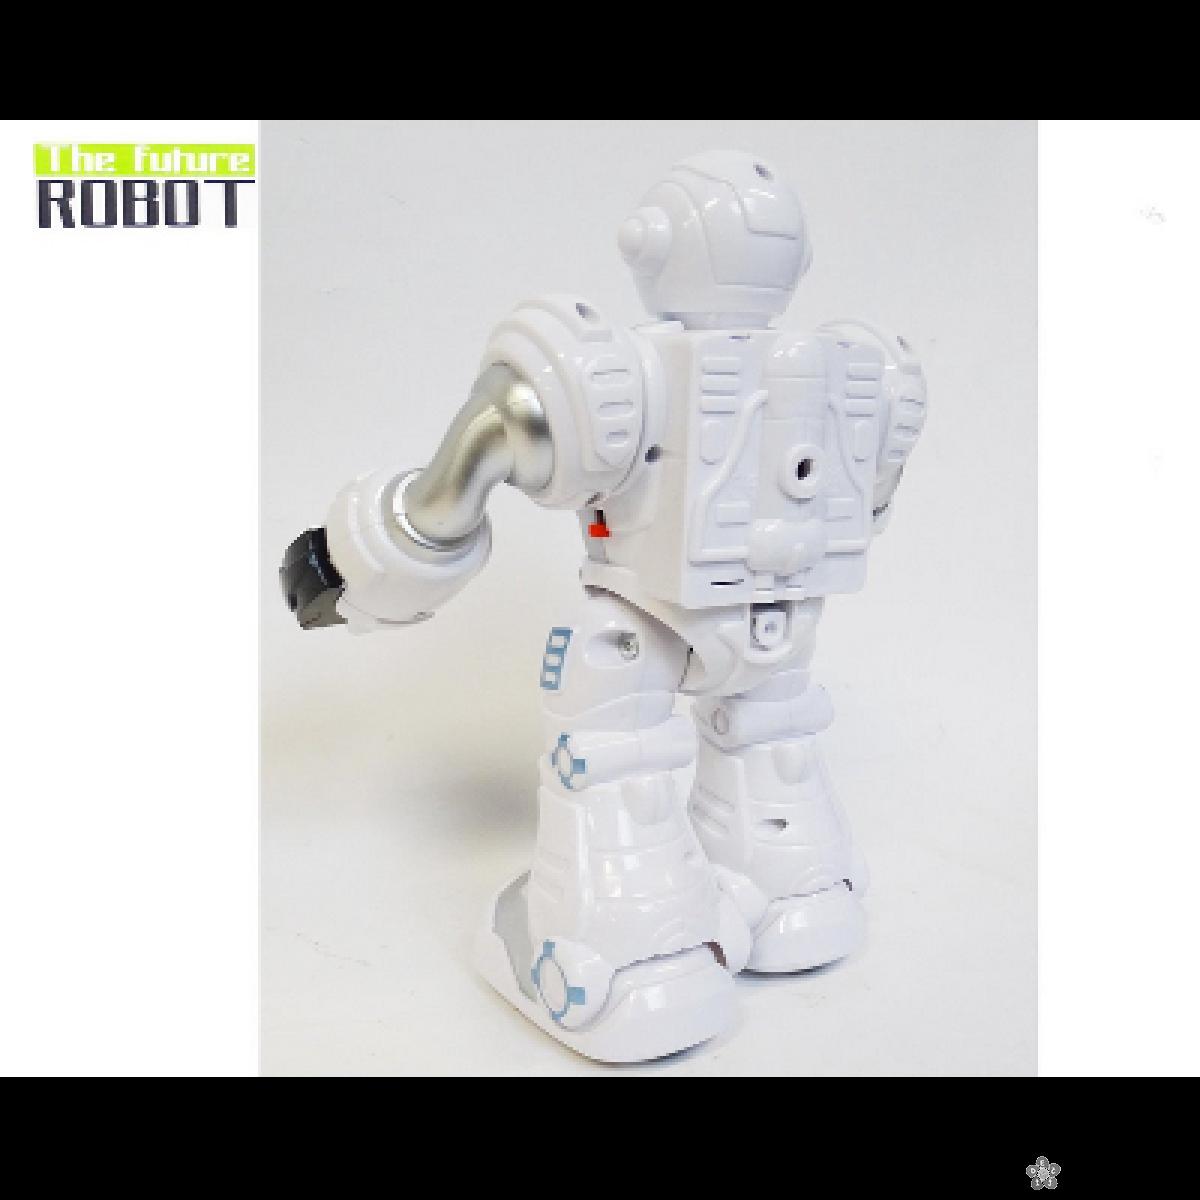 Robot the Future 265106 